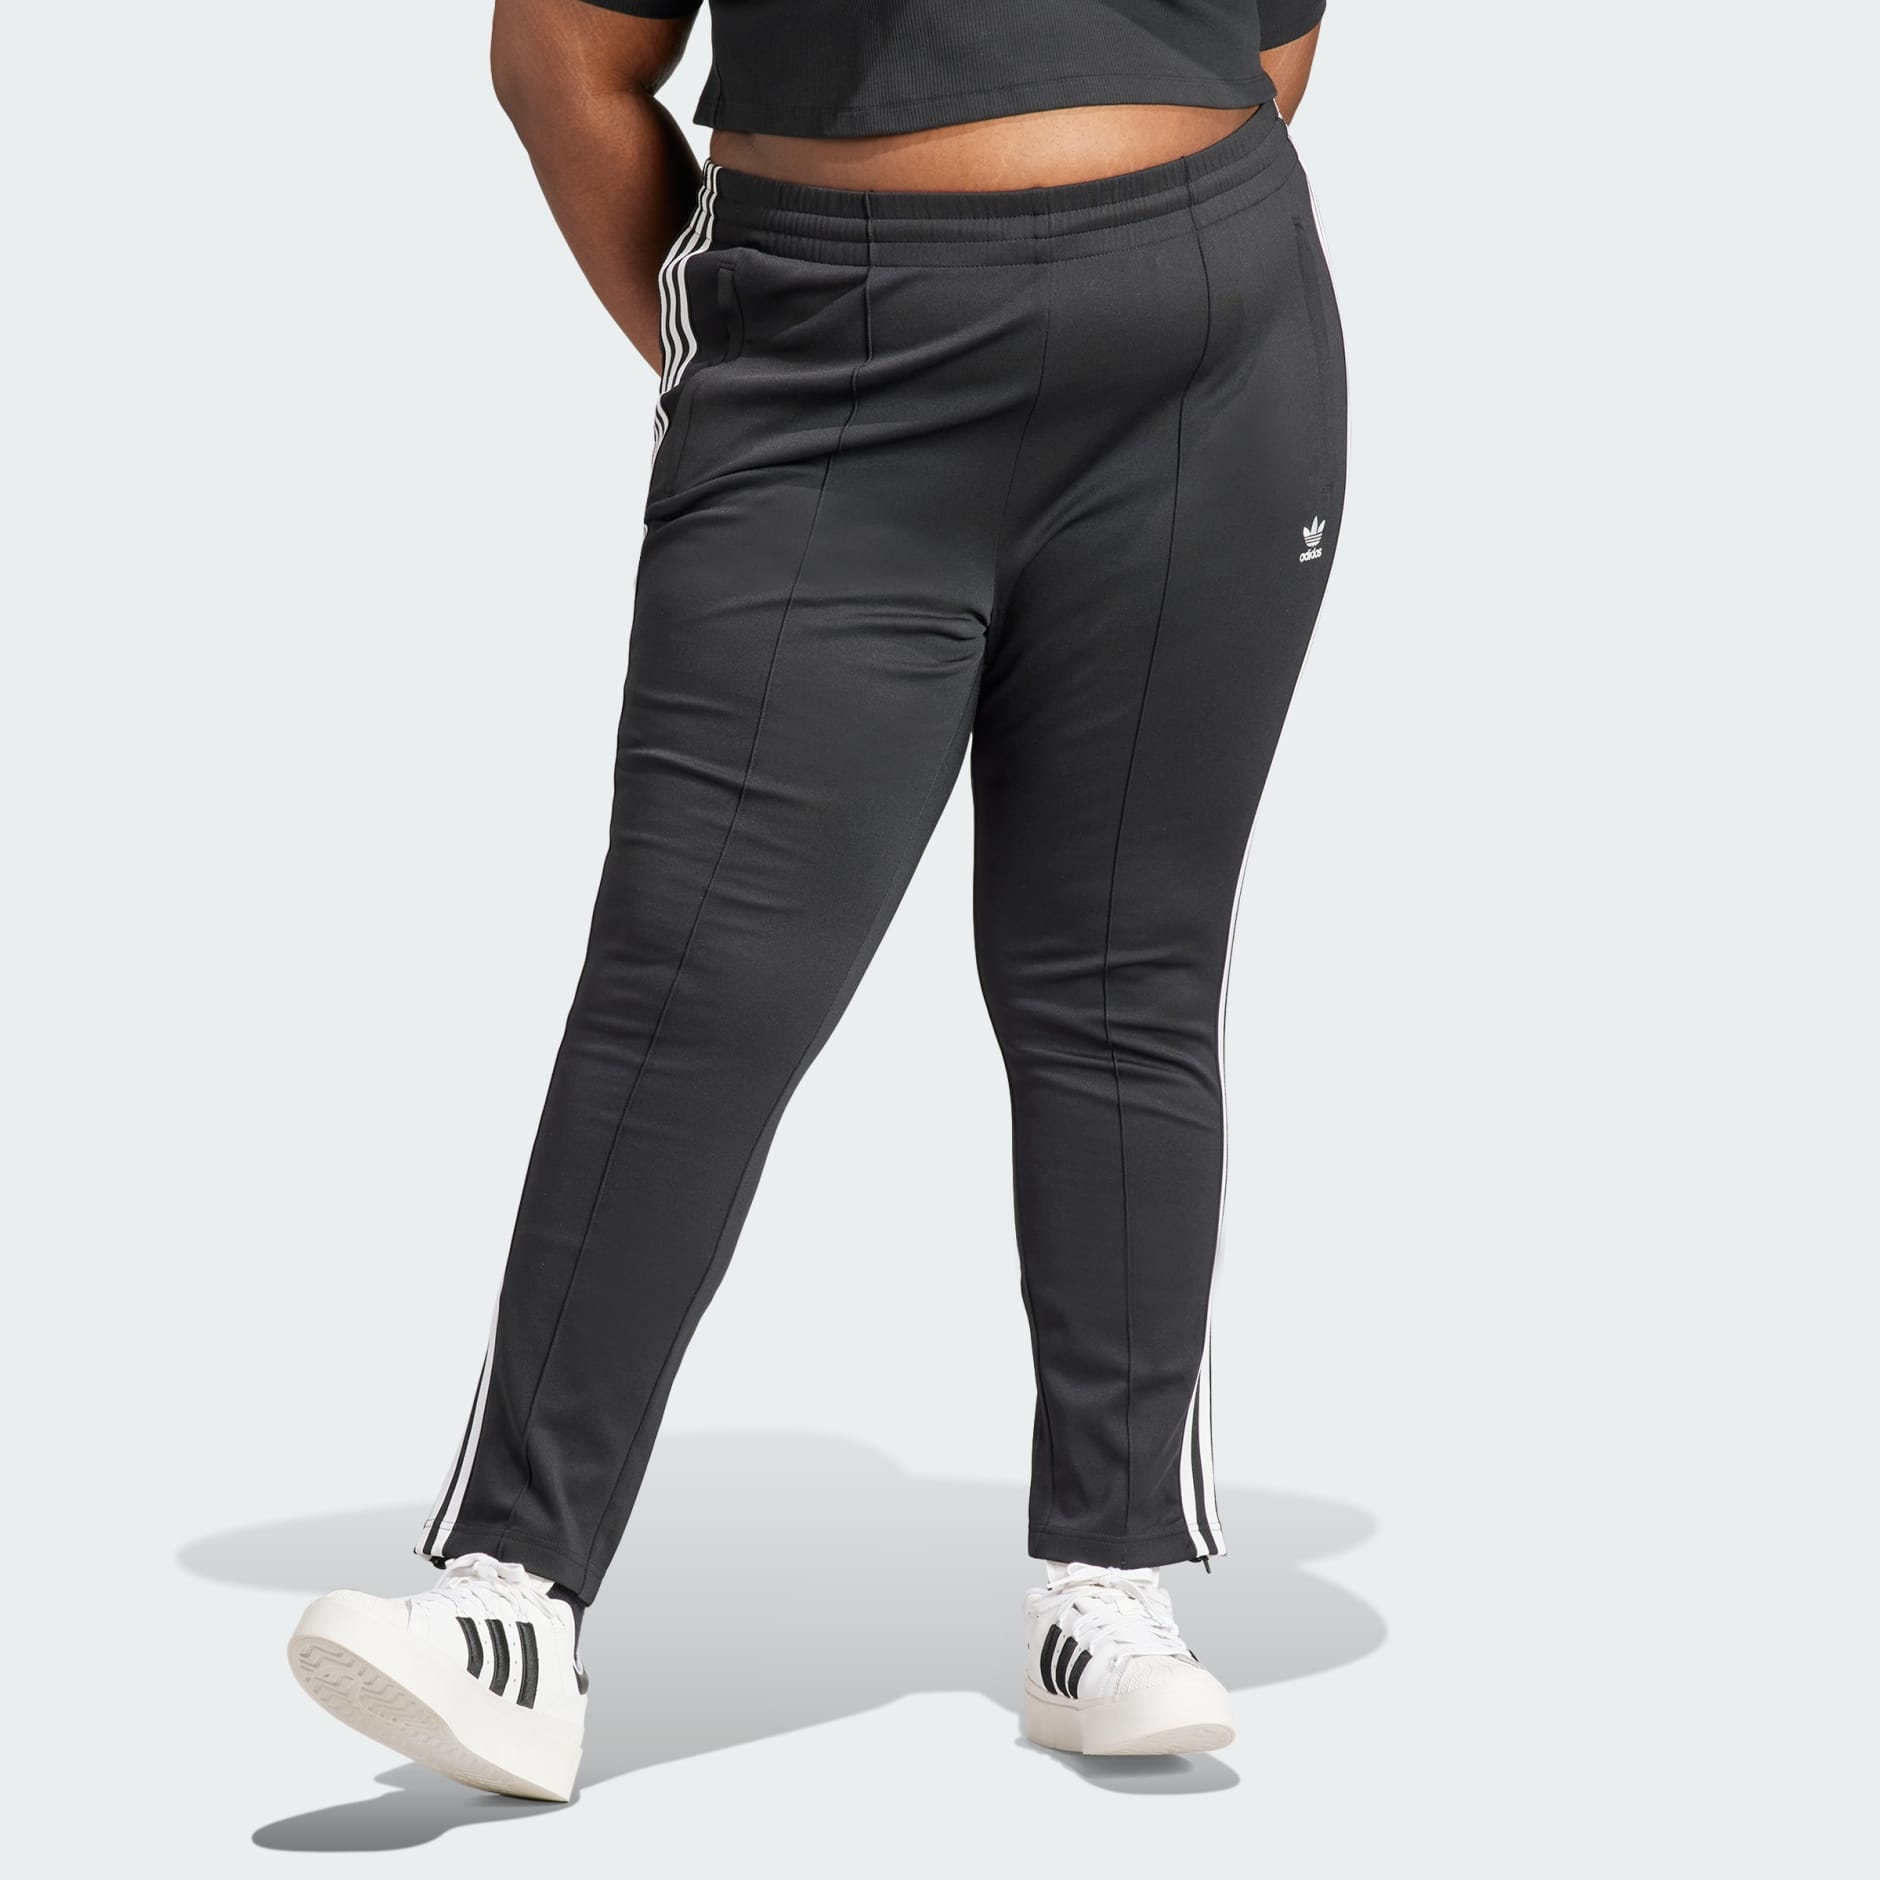 Plus Size Joggers Elastic Black Men's Track Pants With Zipper Pockets -  XMEX Clothing